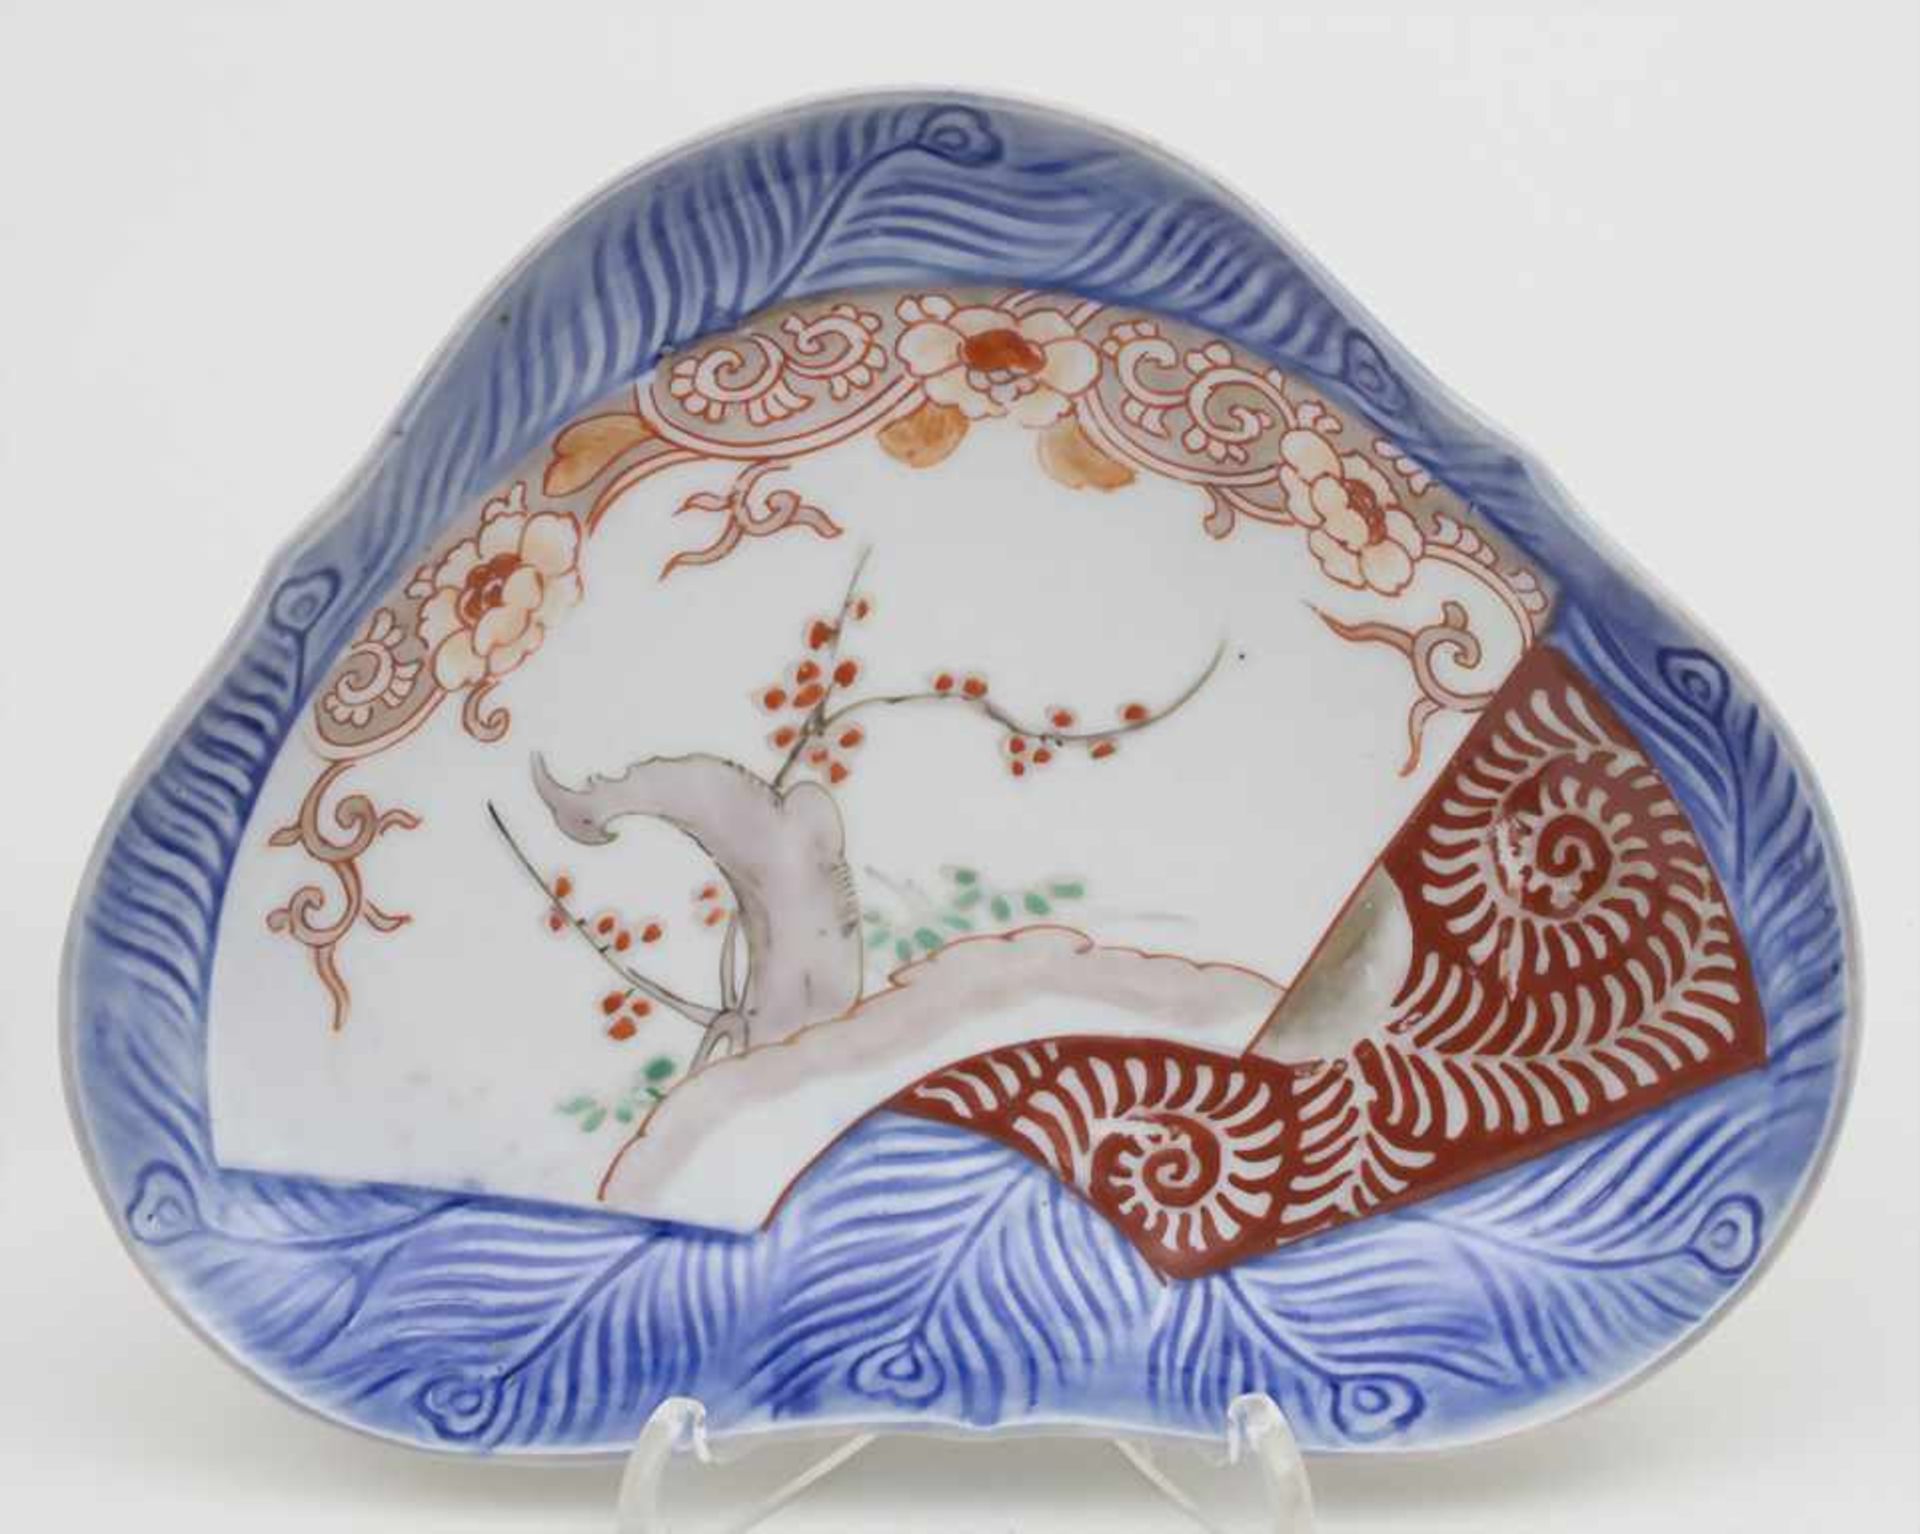 2 Imari-Schalen / Two Imari bowls, Japan, 18./19. Jh.Material: Porzellan, mit Emailfarben bemalt, - Bild 2 aus 5